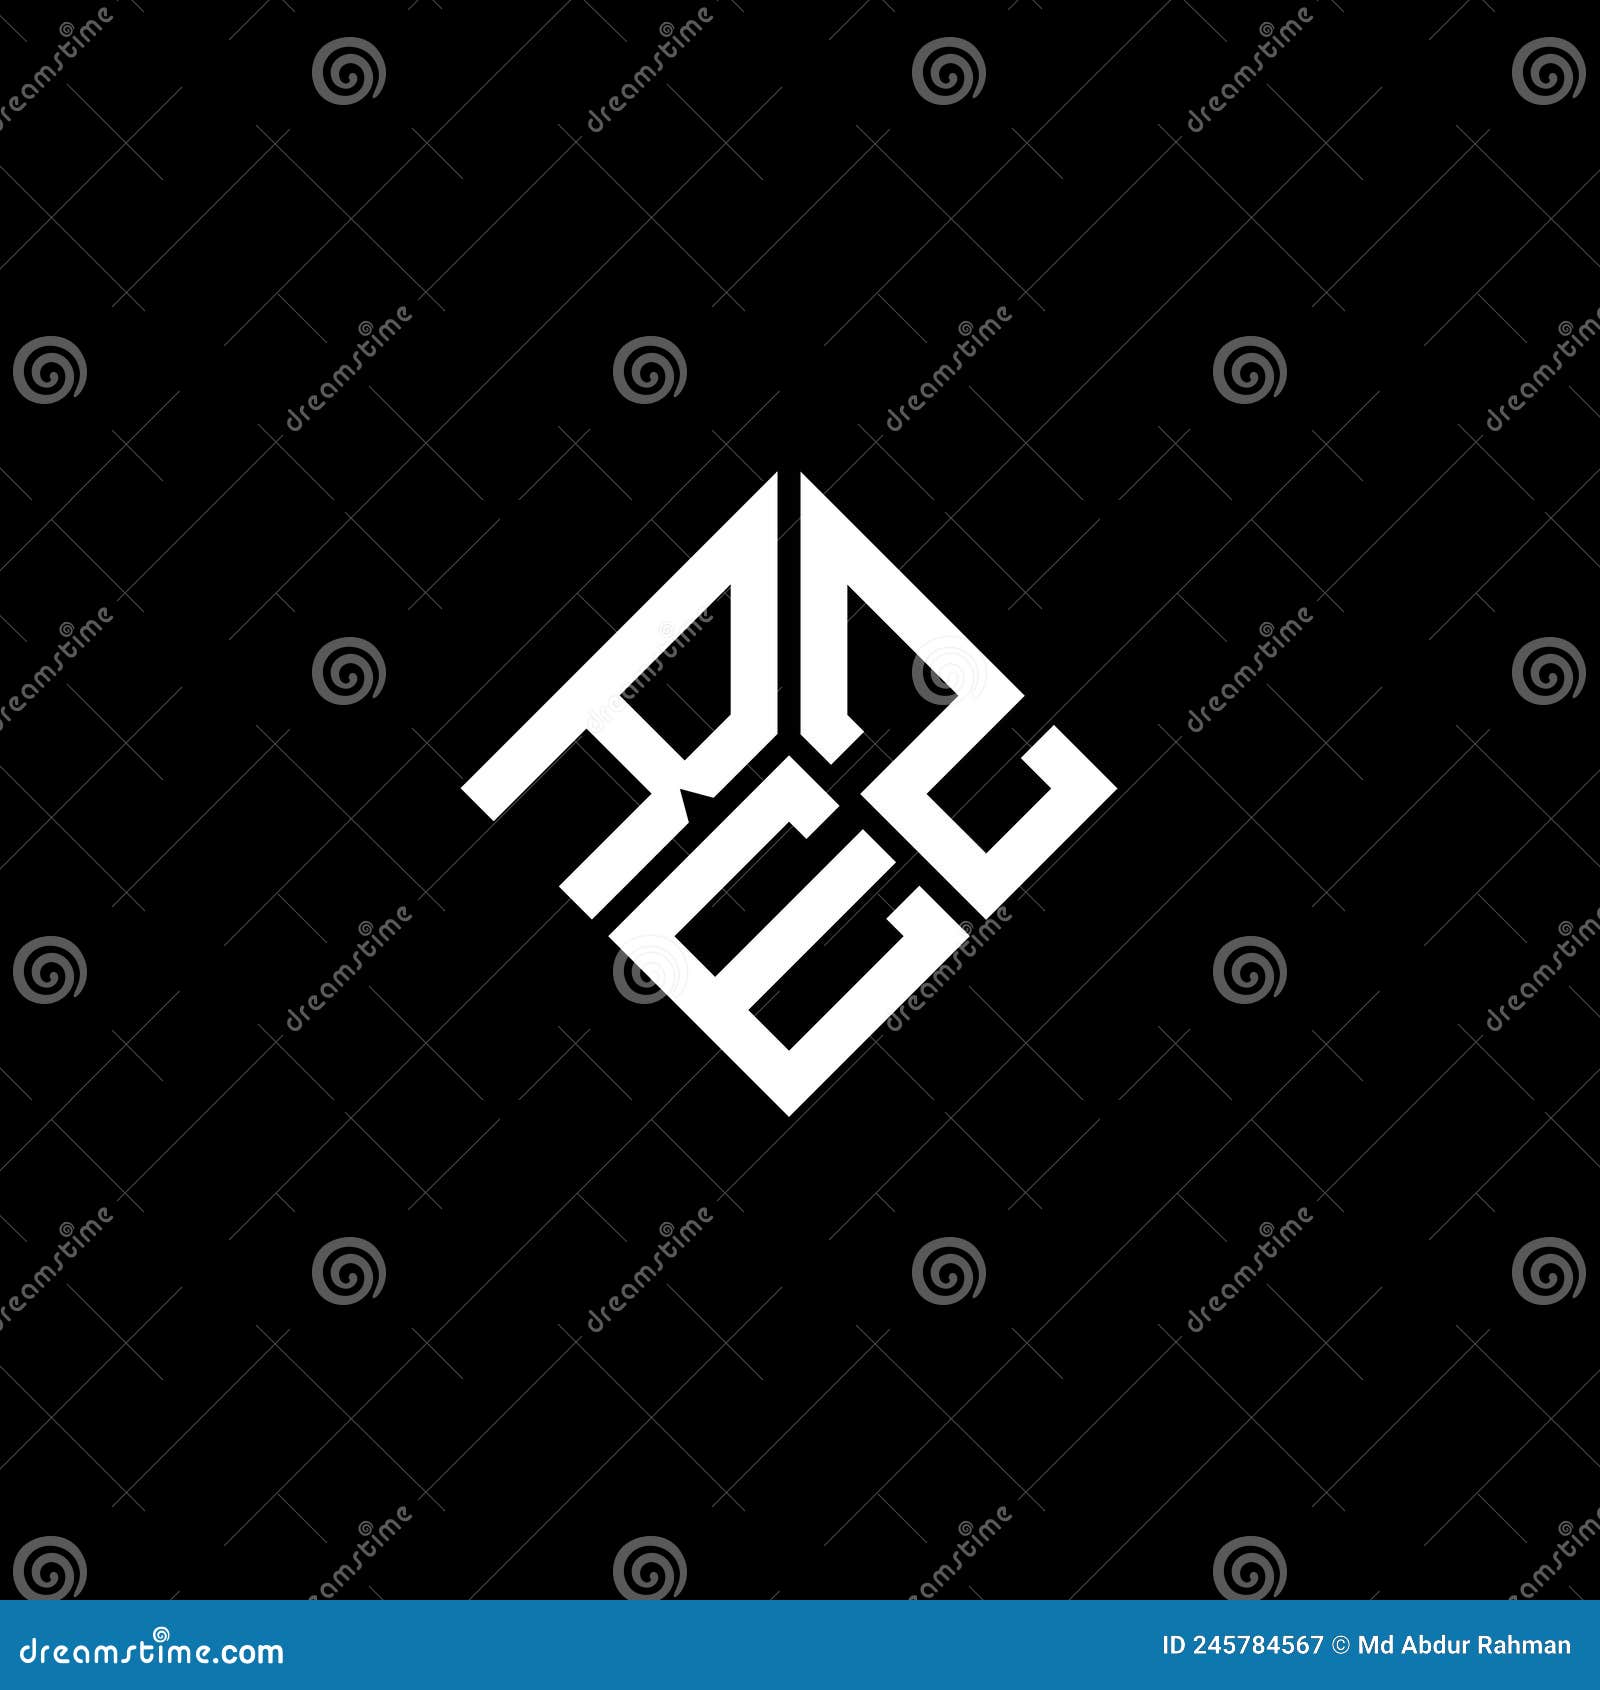 rez letter logo  on black background. rez creative initials letter logo concept. rez letter 